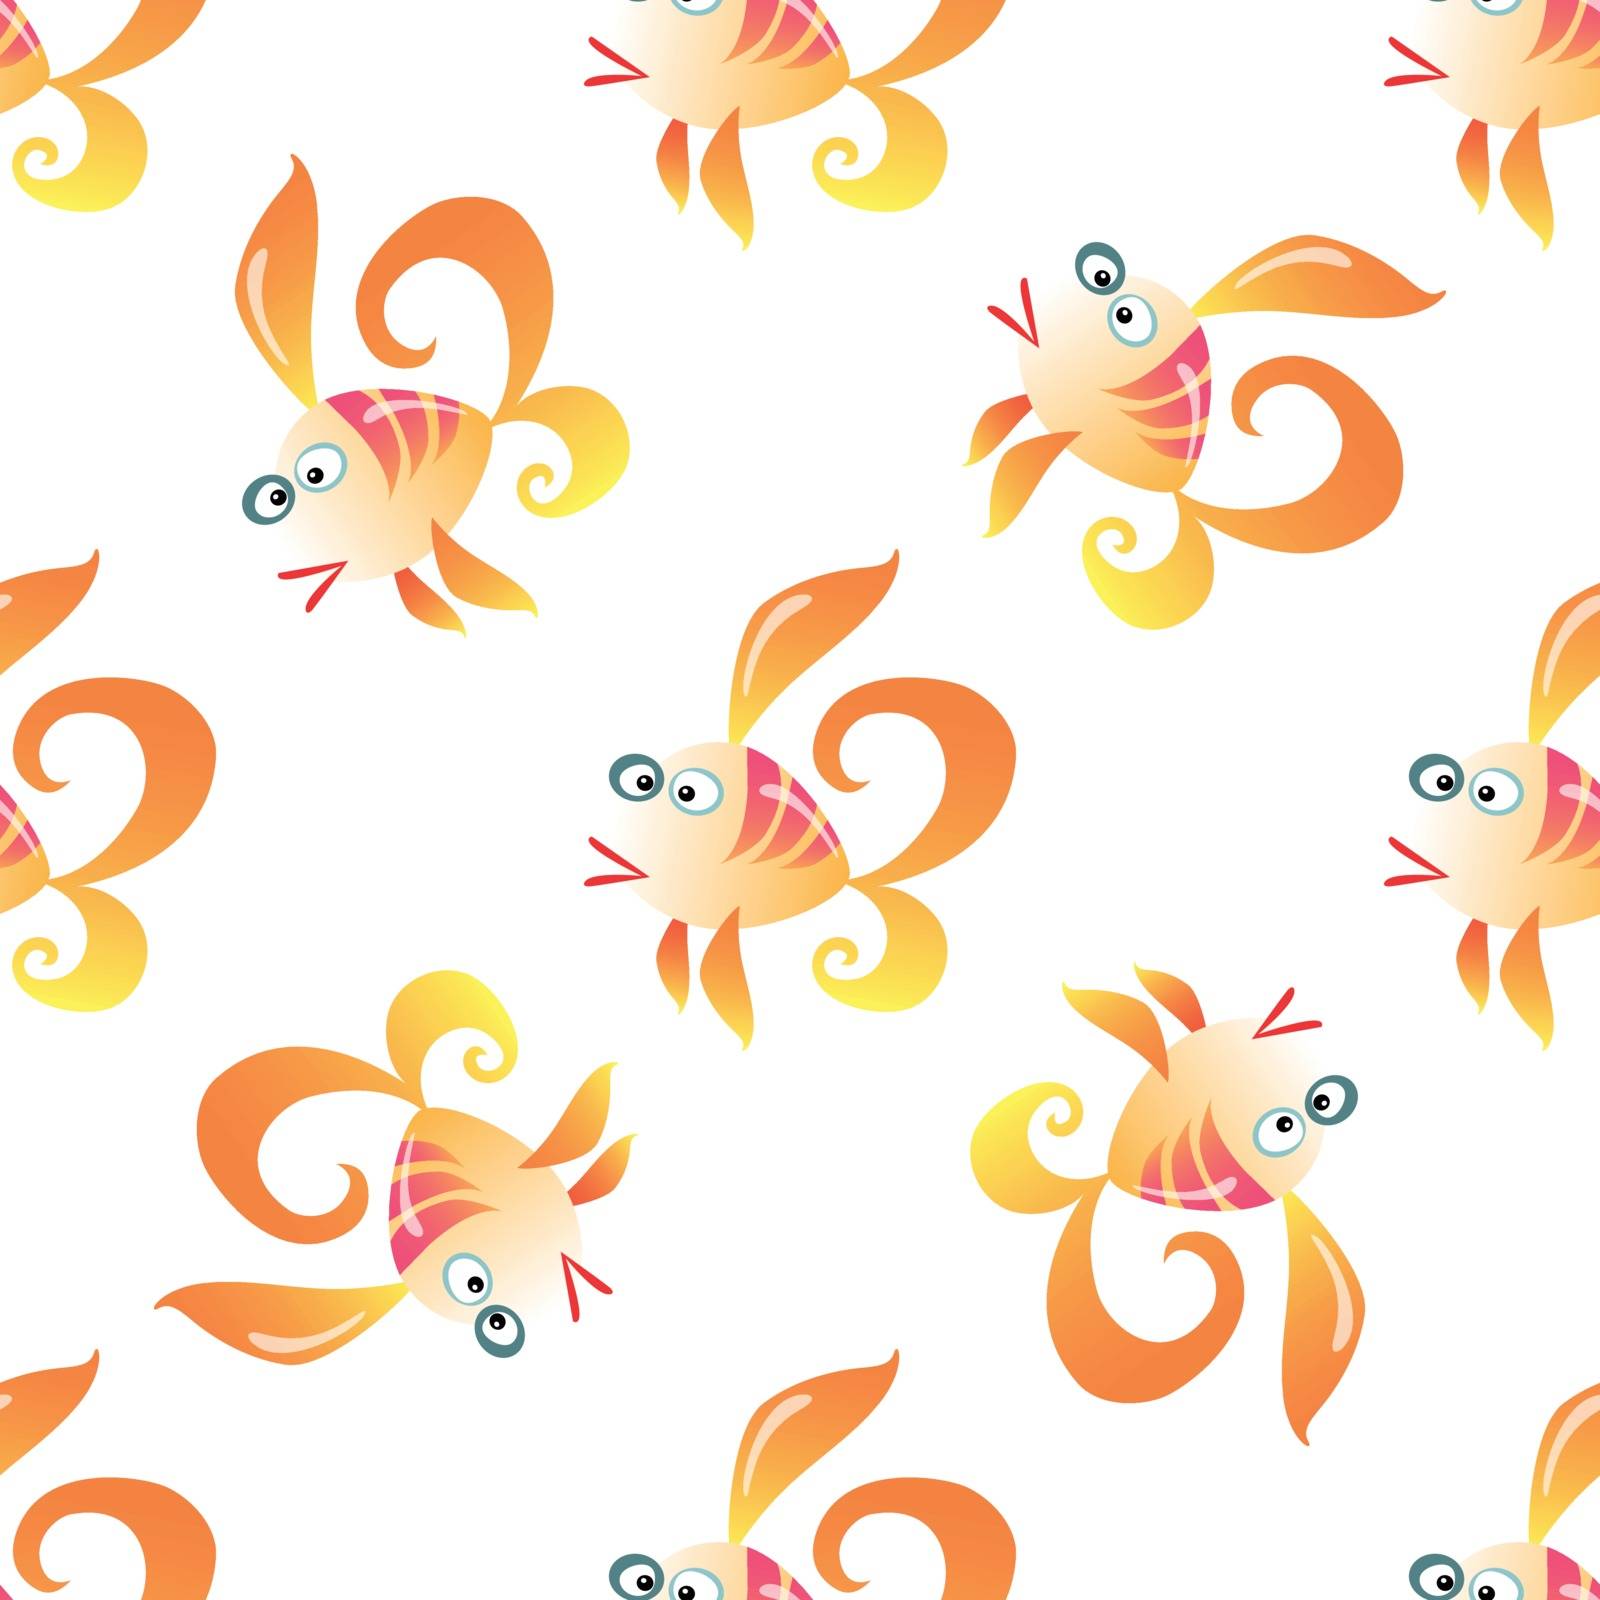 Goldfish marine seamless pattern background. Ocean animals vector